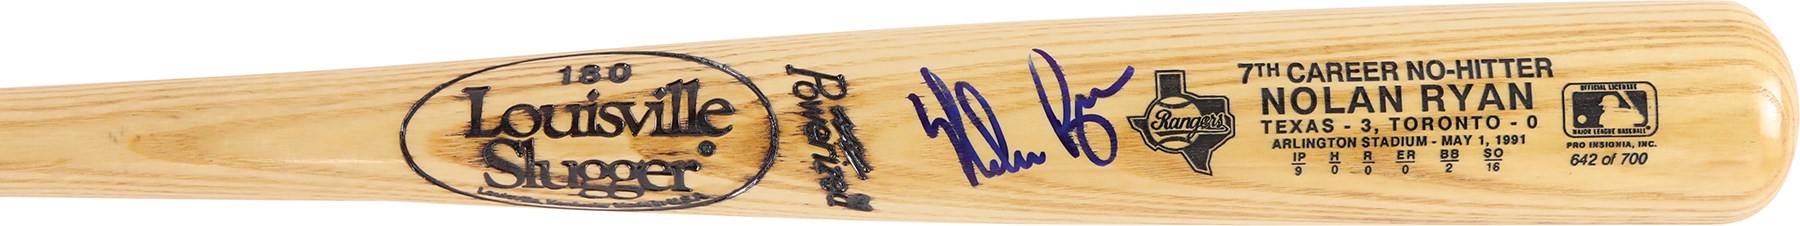 Baseball Autographs - Nolan Ryan Signed 7th Career No-Hitter Commemorative Bat